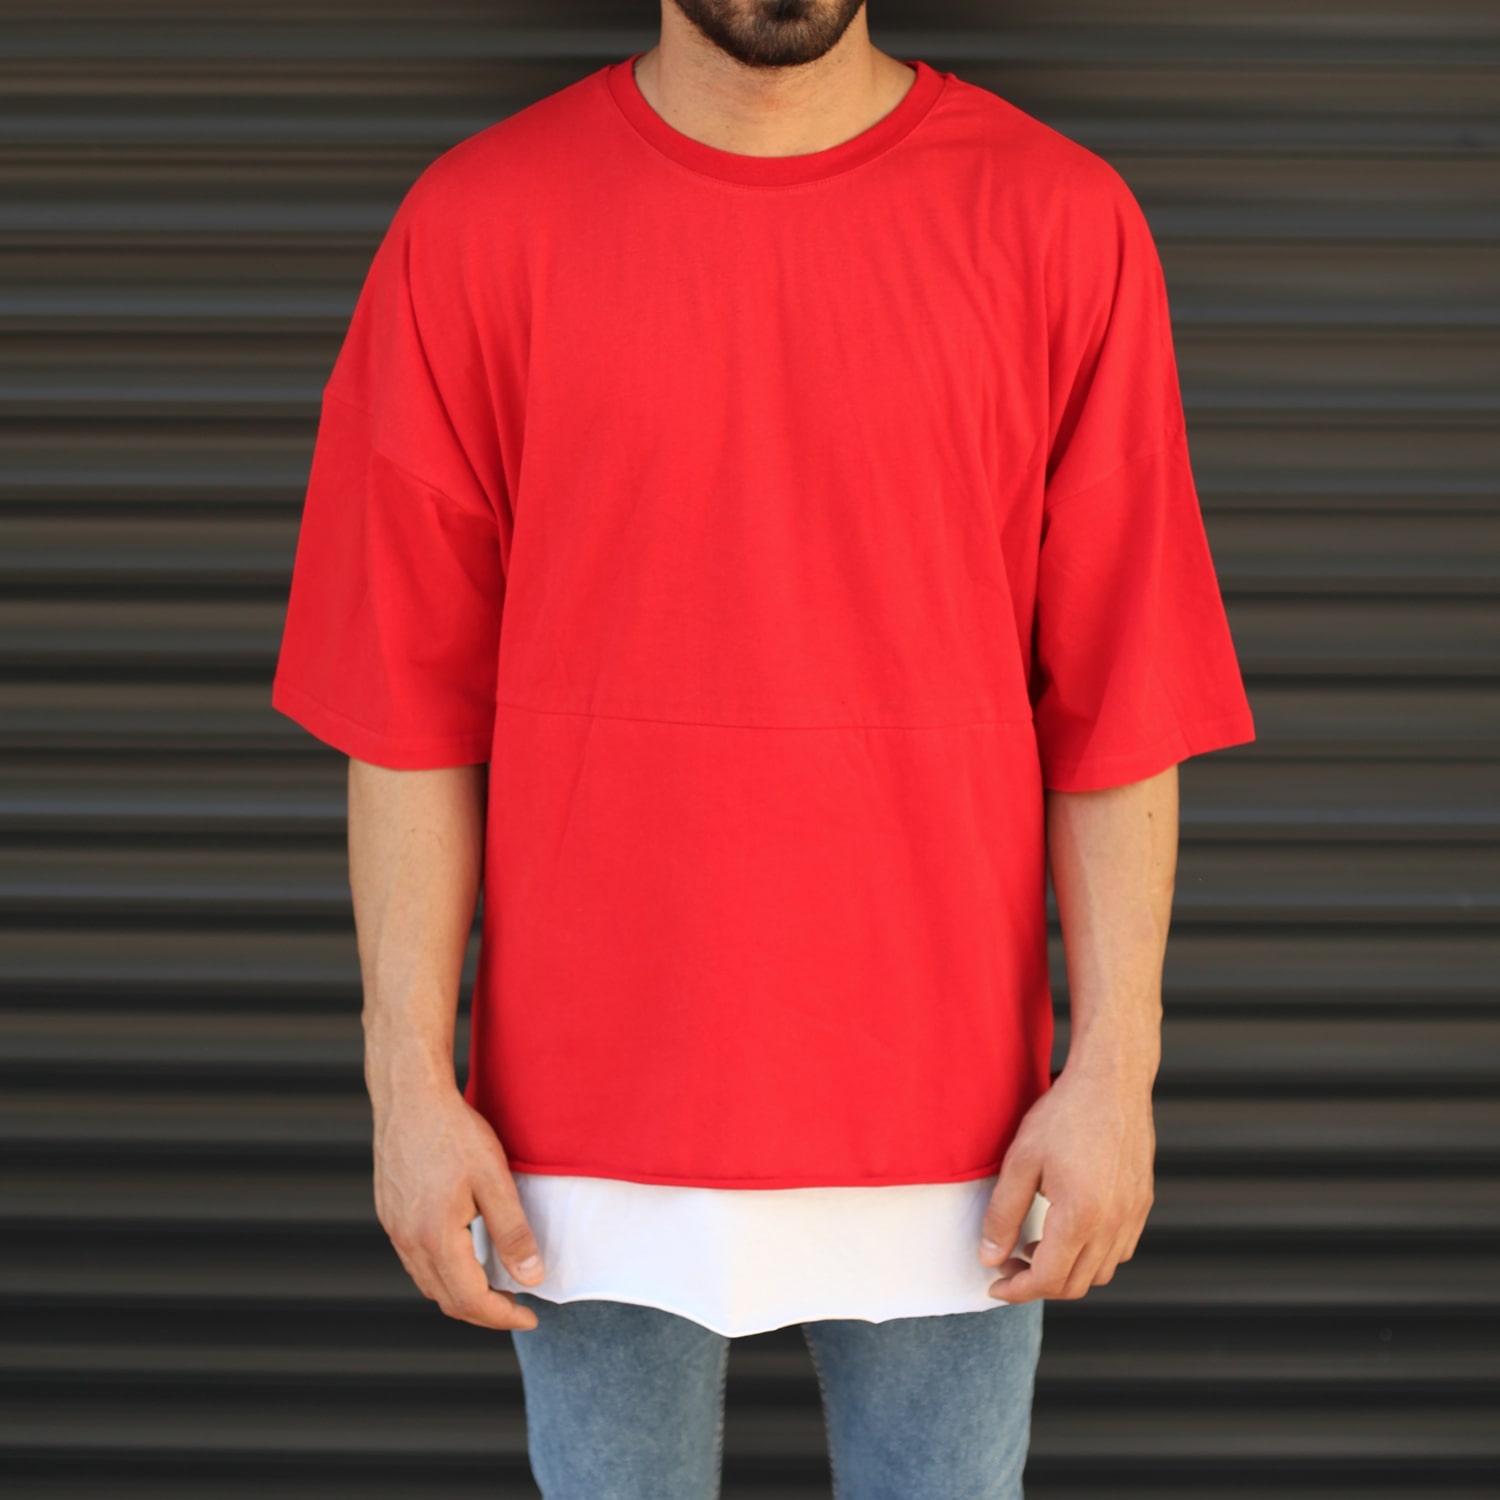 shirt for men red